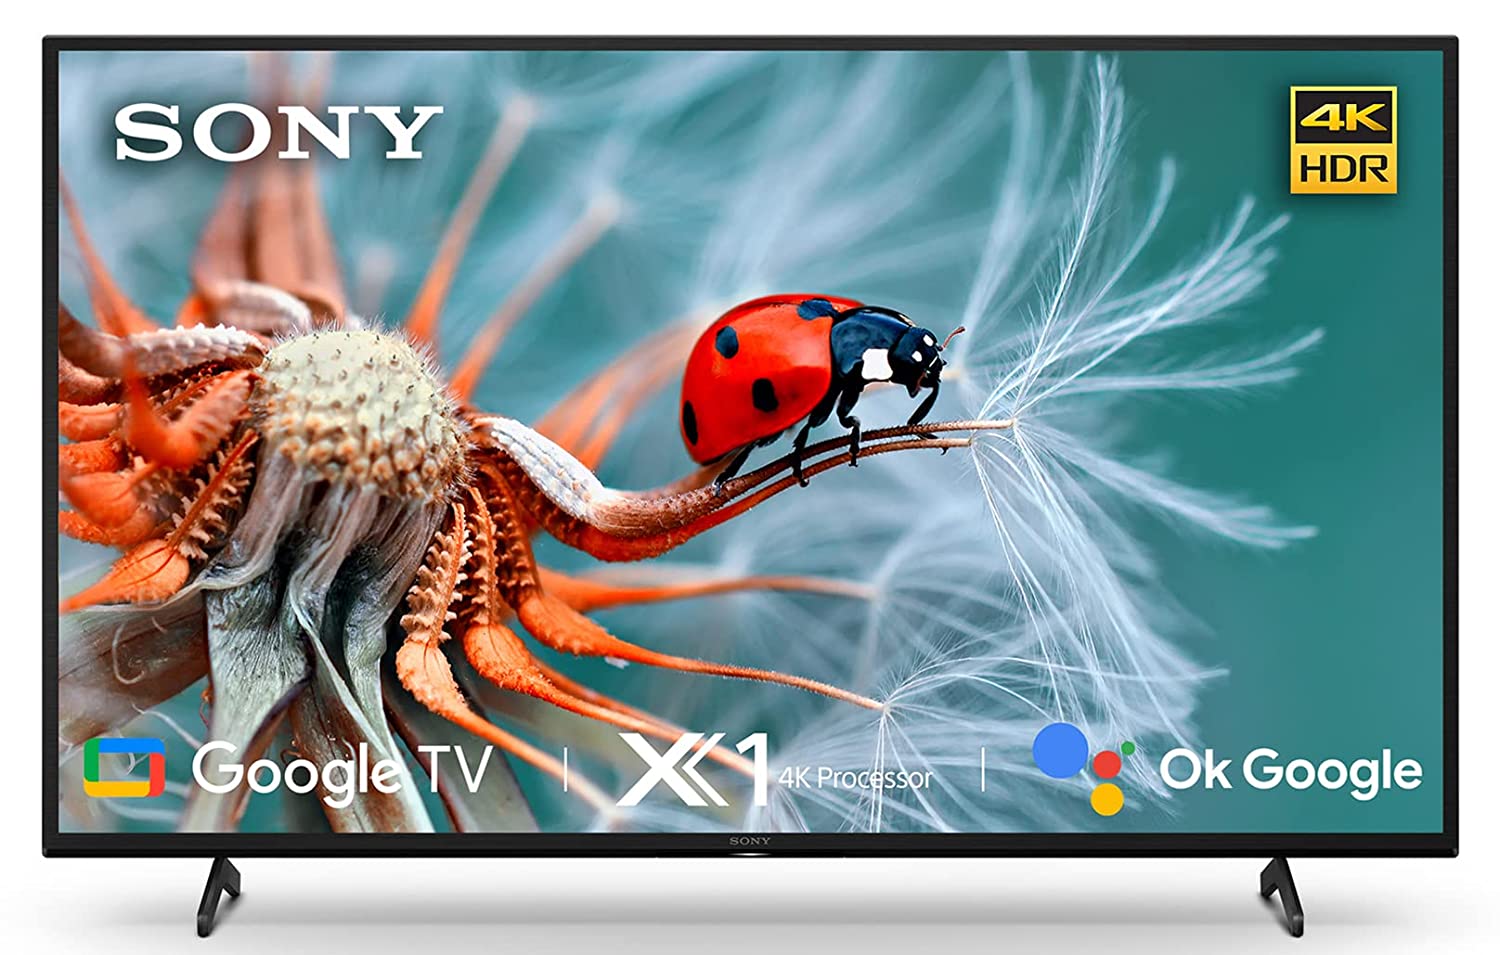 Sony Bravia 43 inches Smart LED Google TV